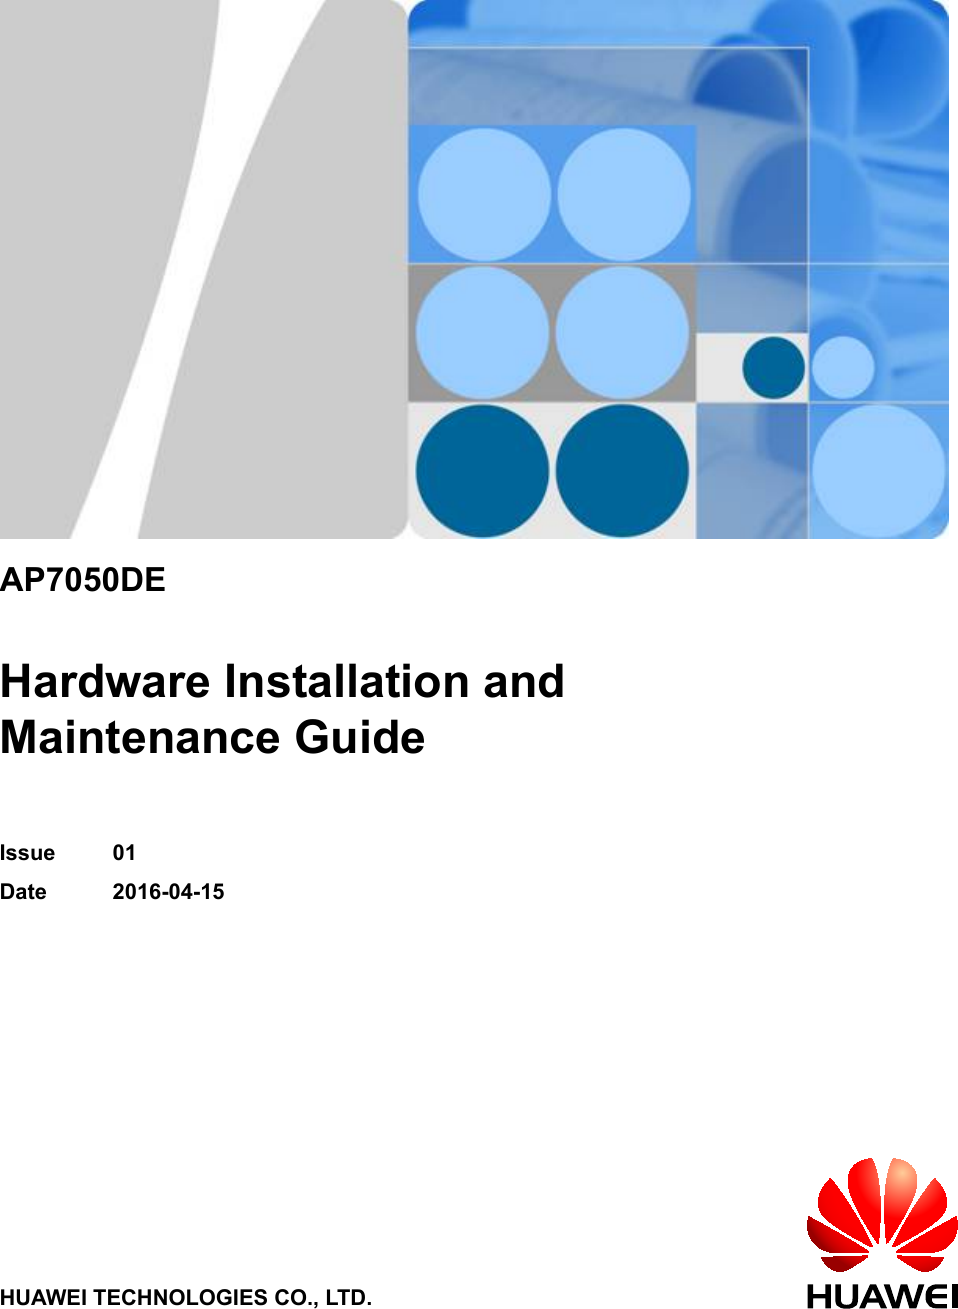 AP7050DEHardware Installation andMaintenance GuideIssue 01Date 2016-04-15HUAWEI TECHNOLOGIES CO., LTD.